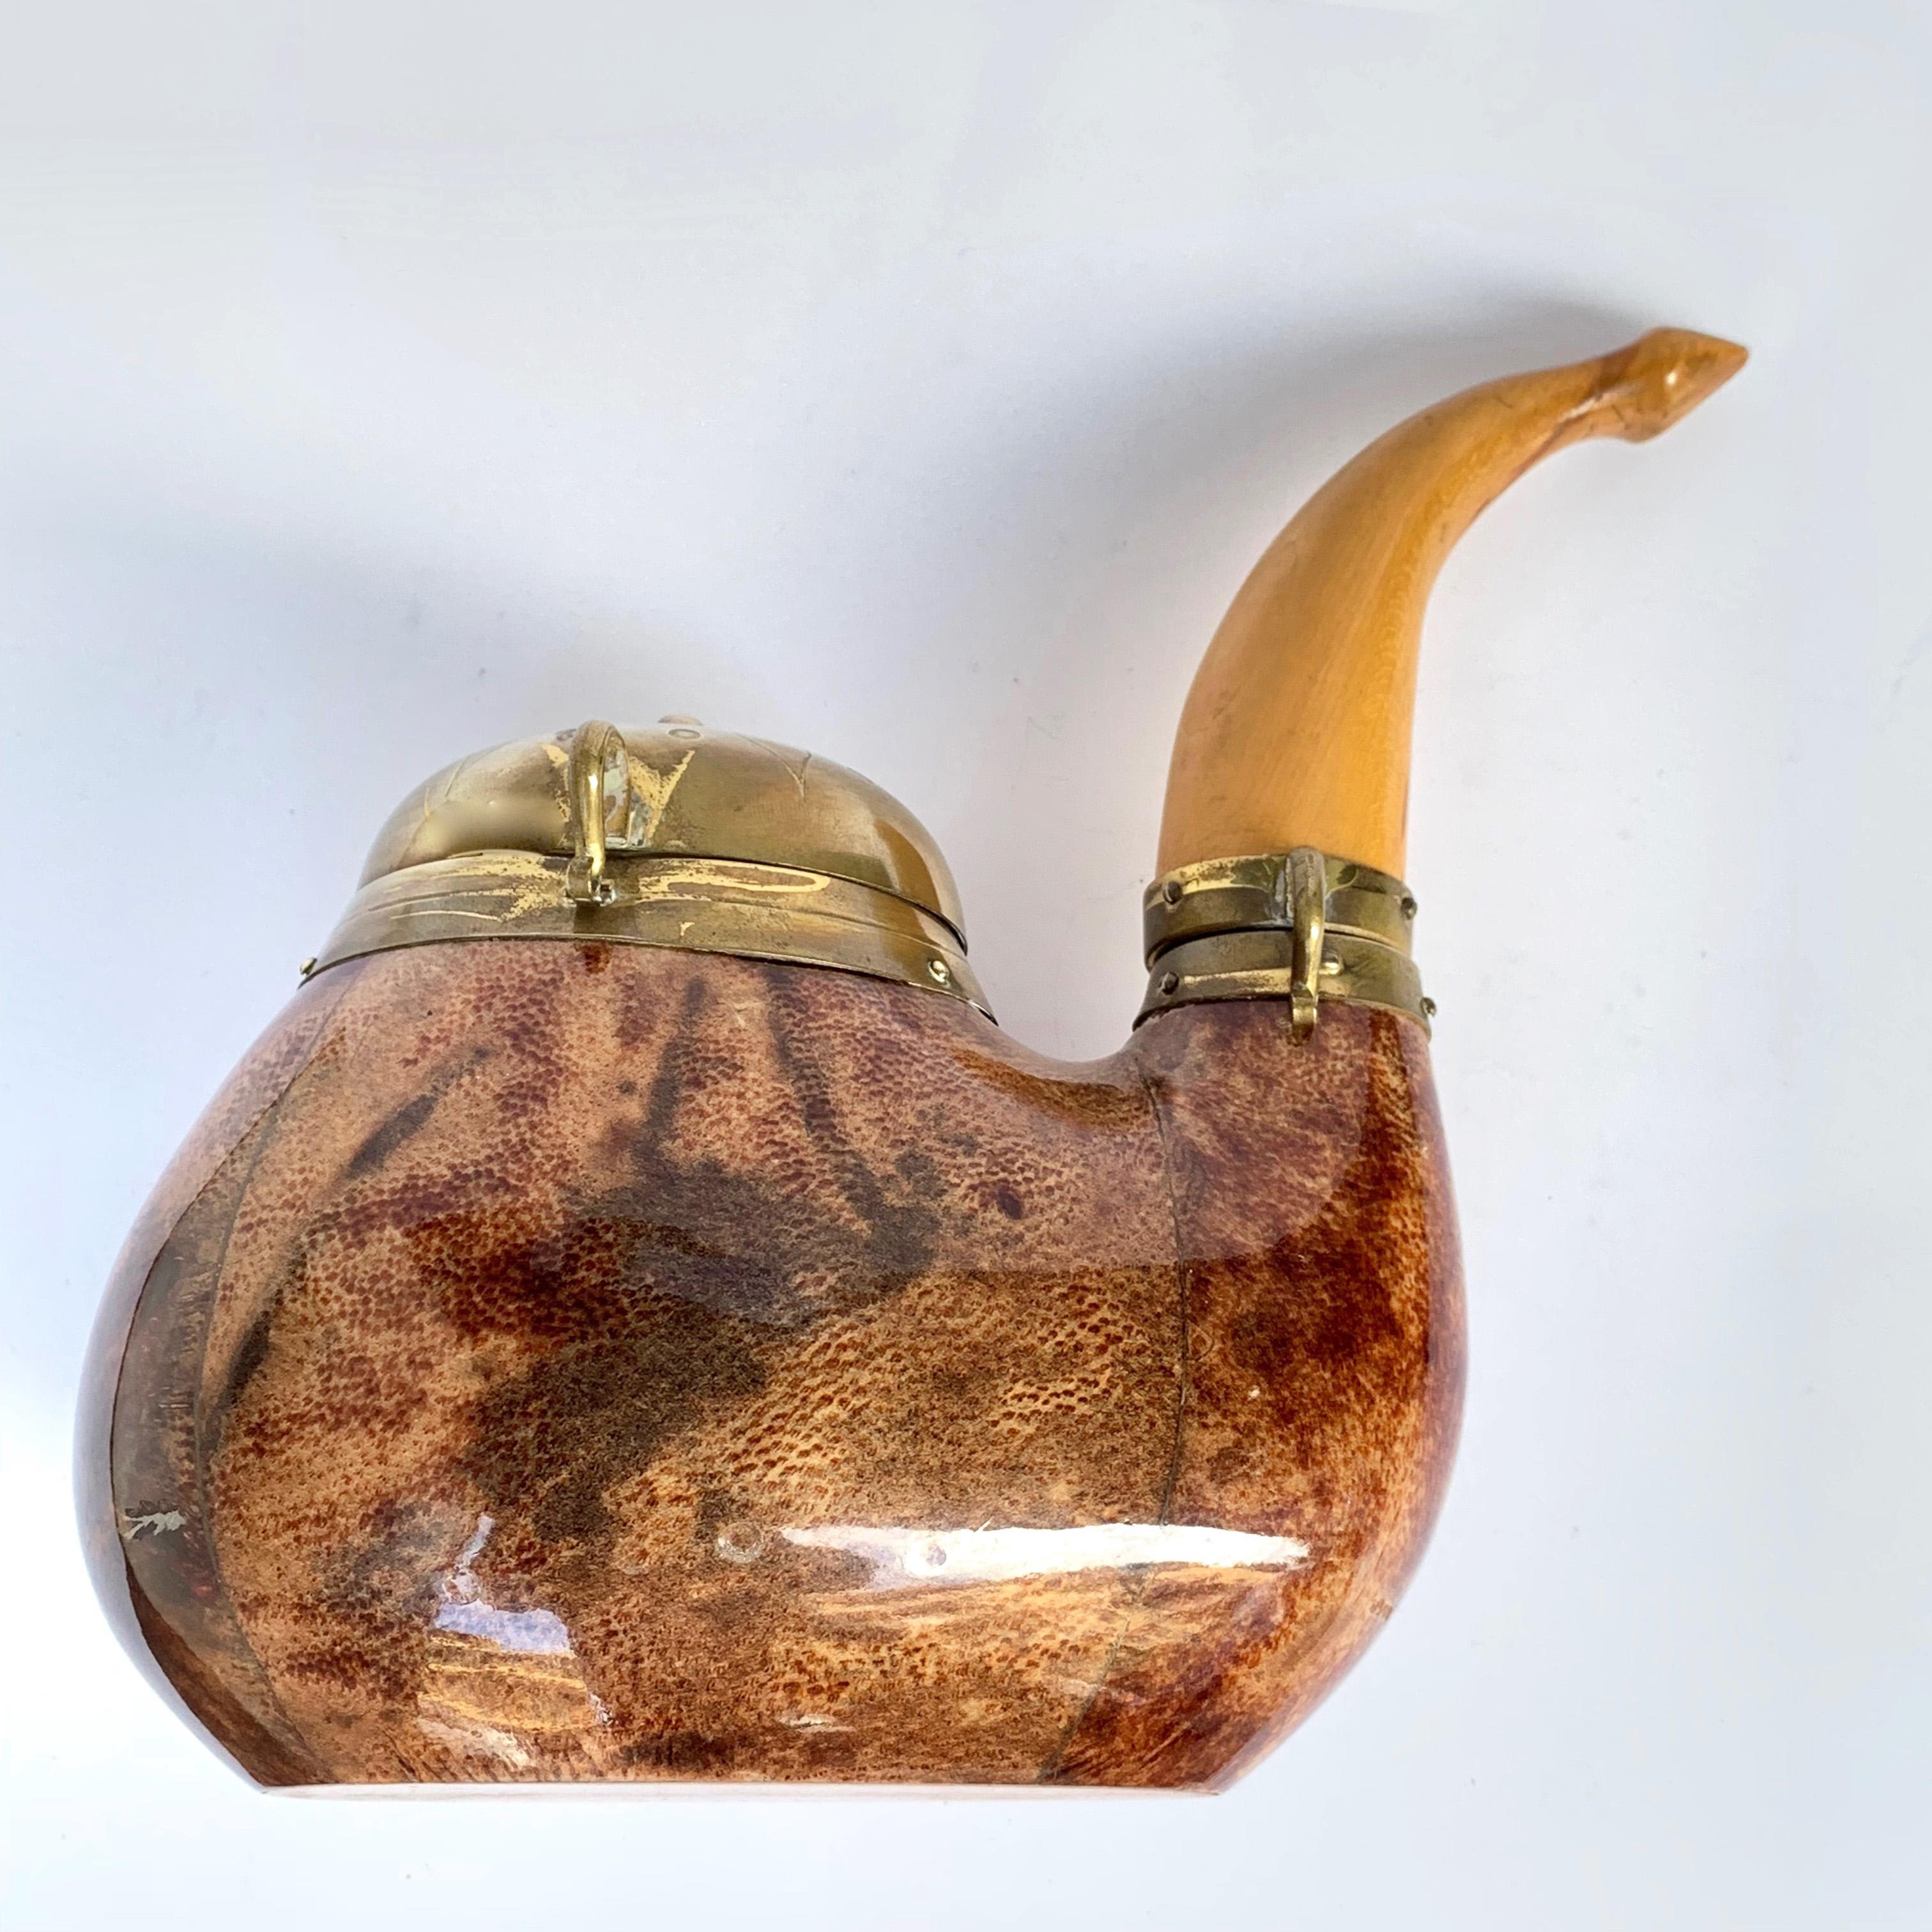 Aldo Tura Goat Skin, Brass and Wood Italian Pipe Shaped Tobacco Box, 1940s For Sale 6